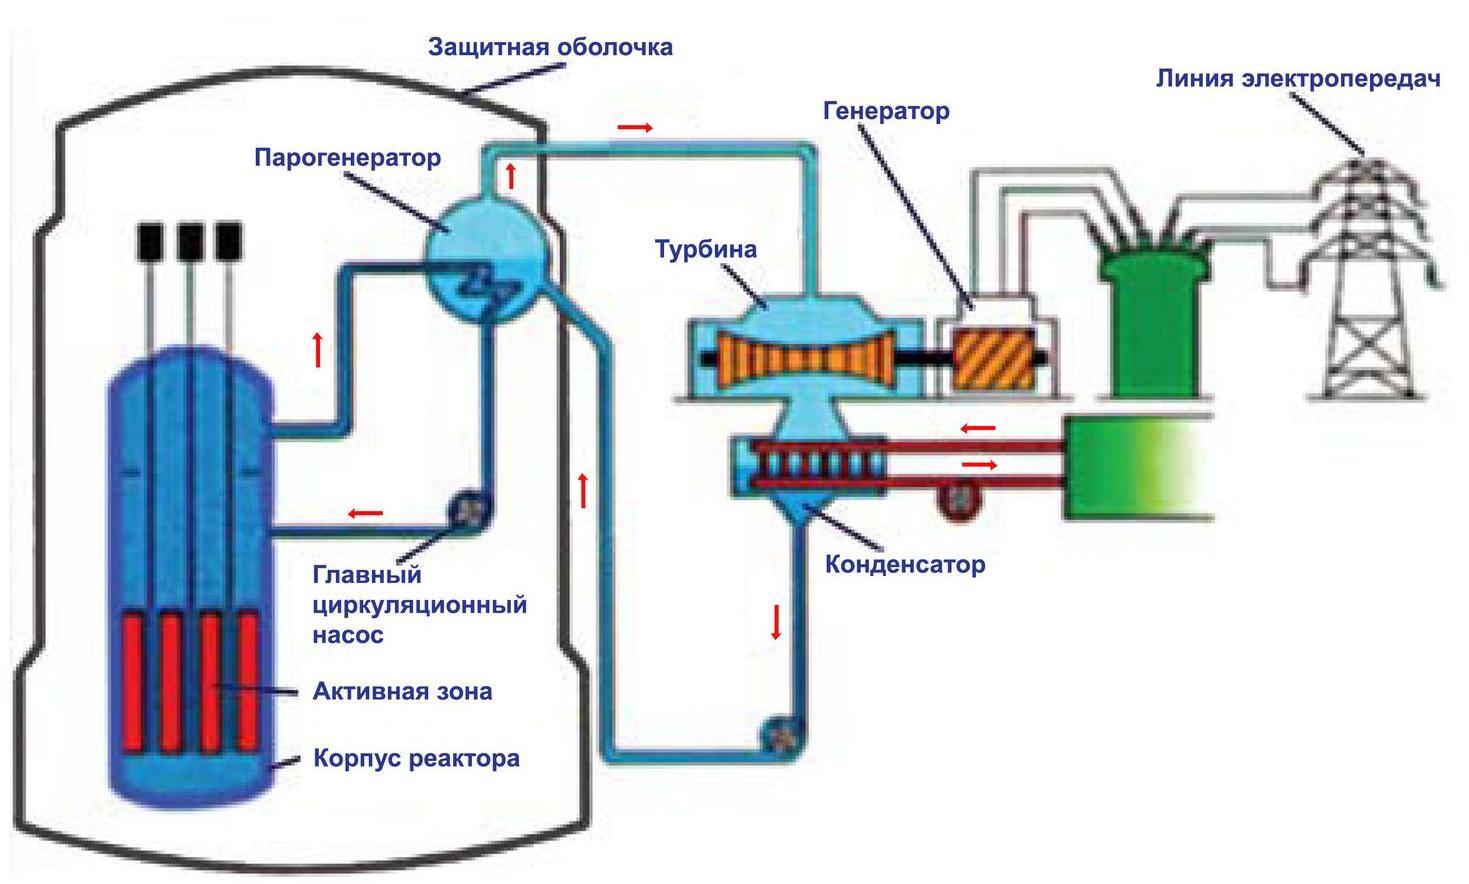 Схема энергоблока с реактором типа ВВЭР